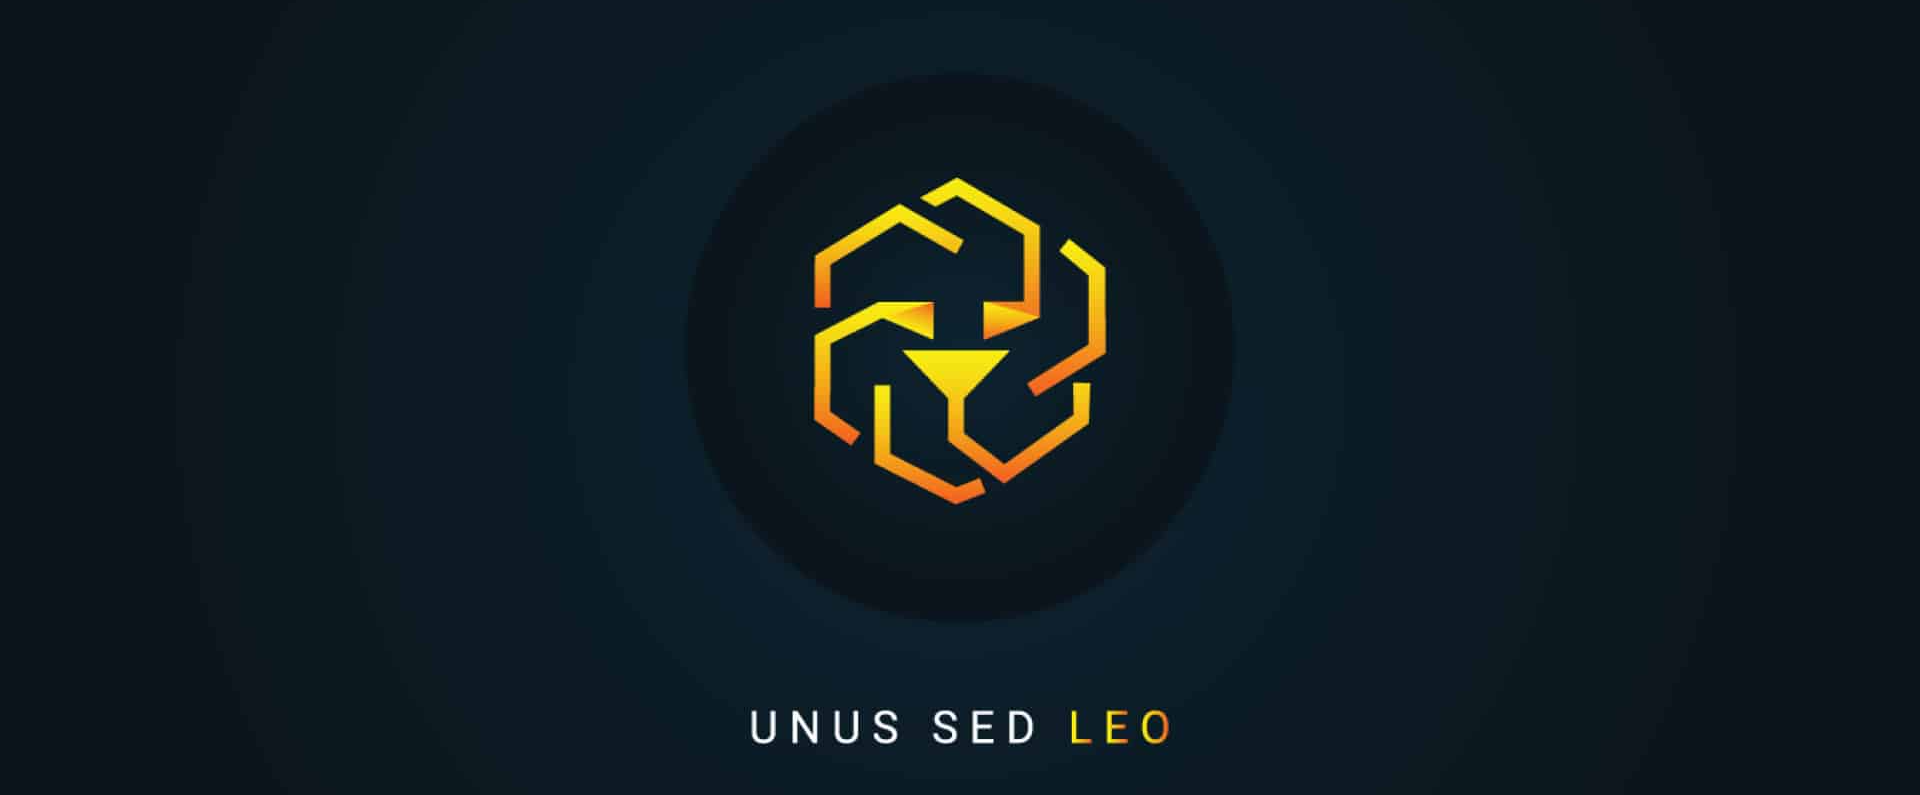 What is UNUS SED LEO cryptocurrency?